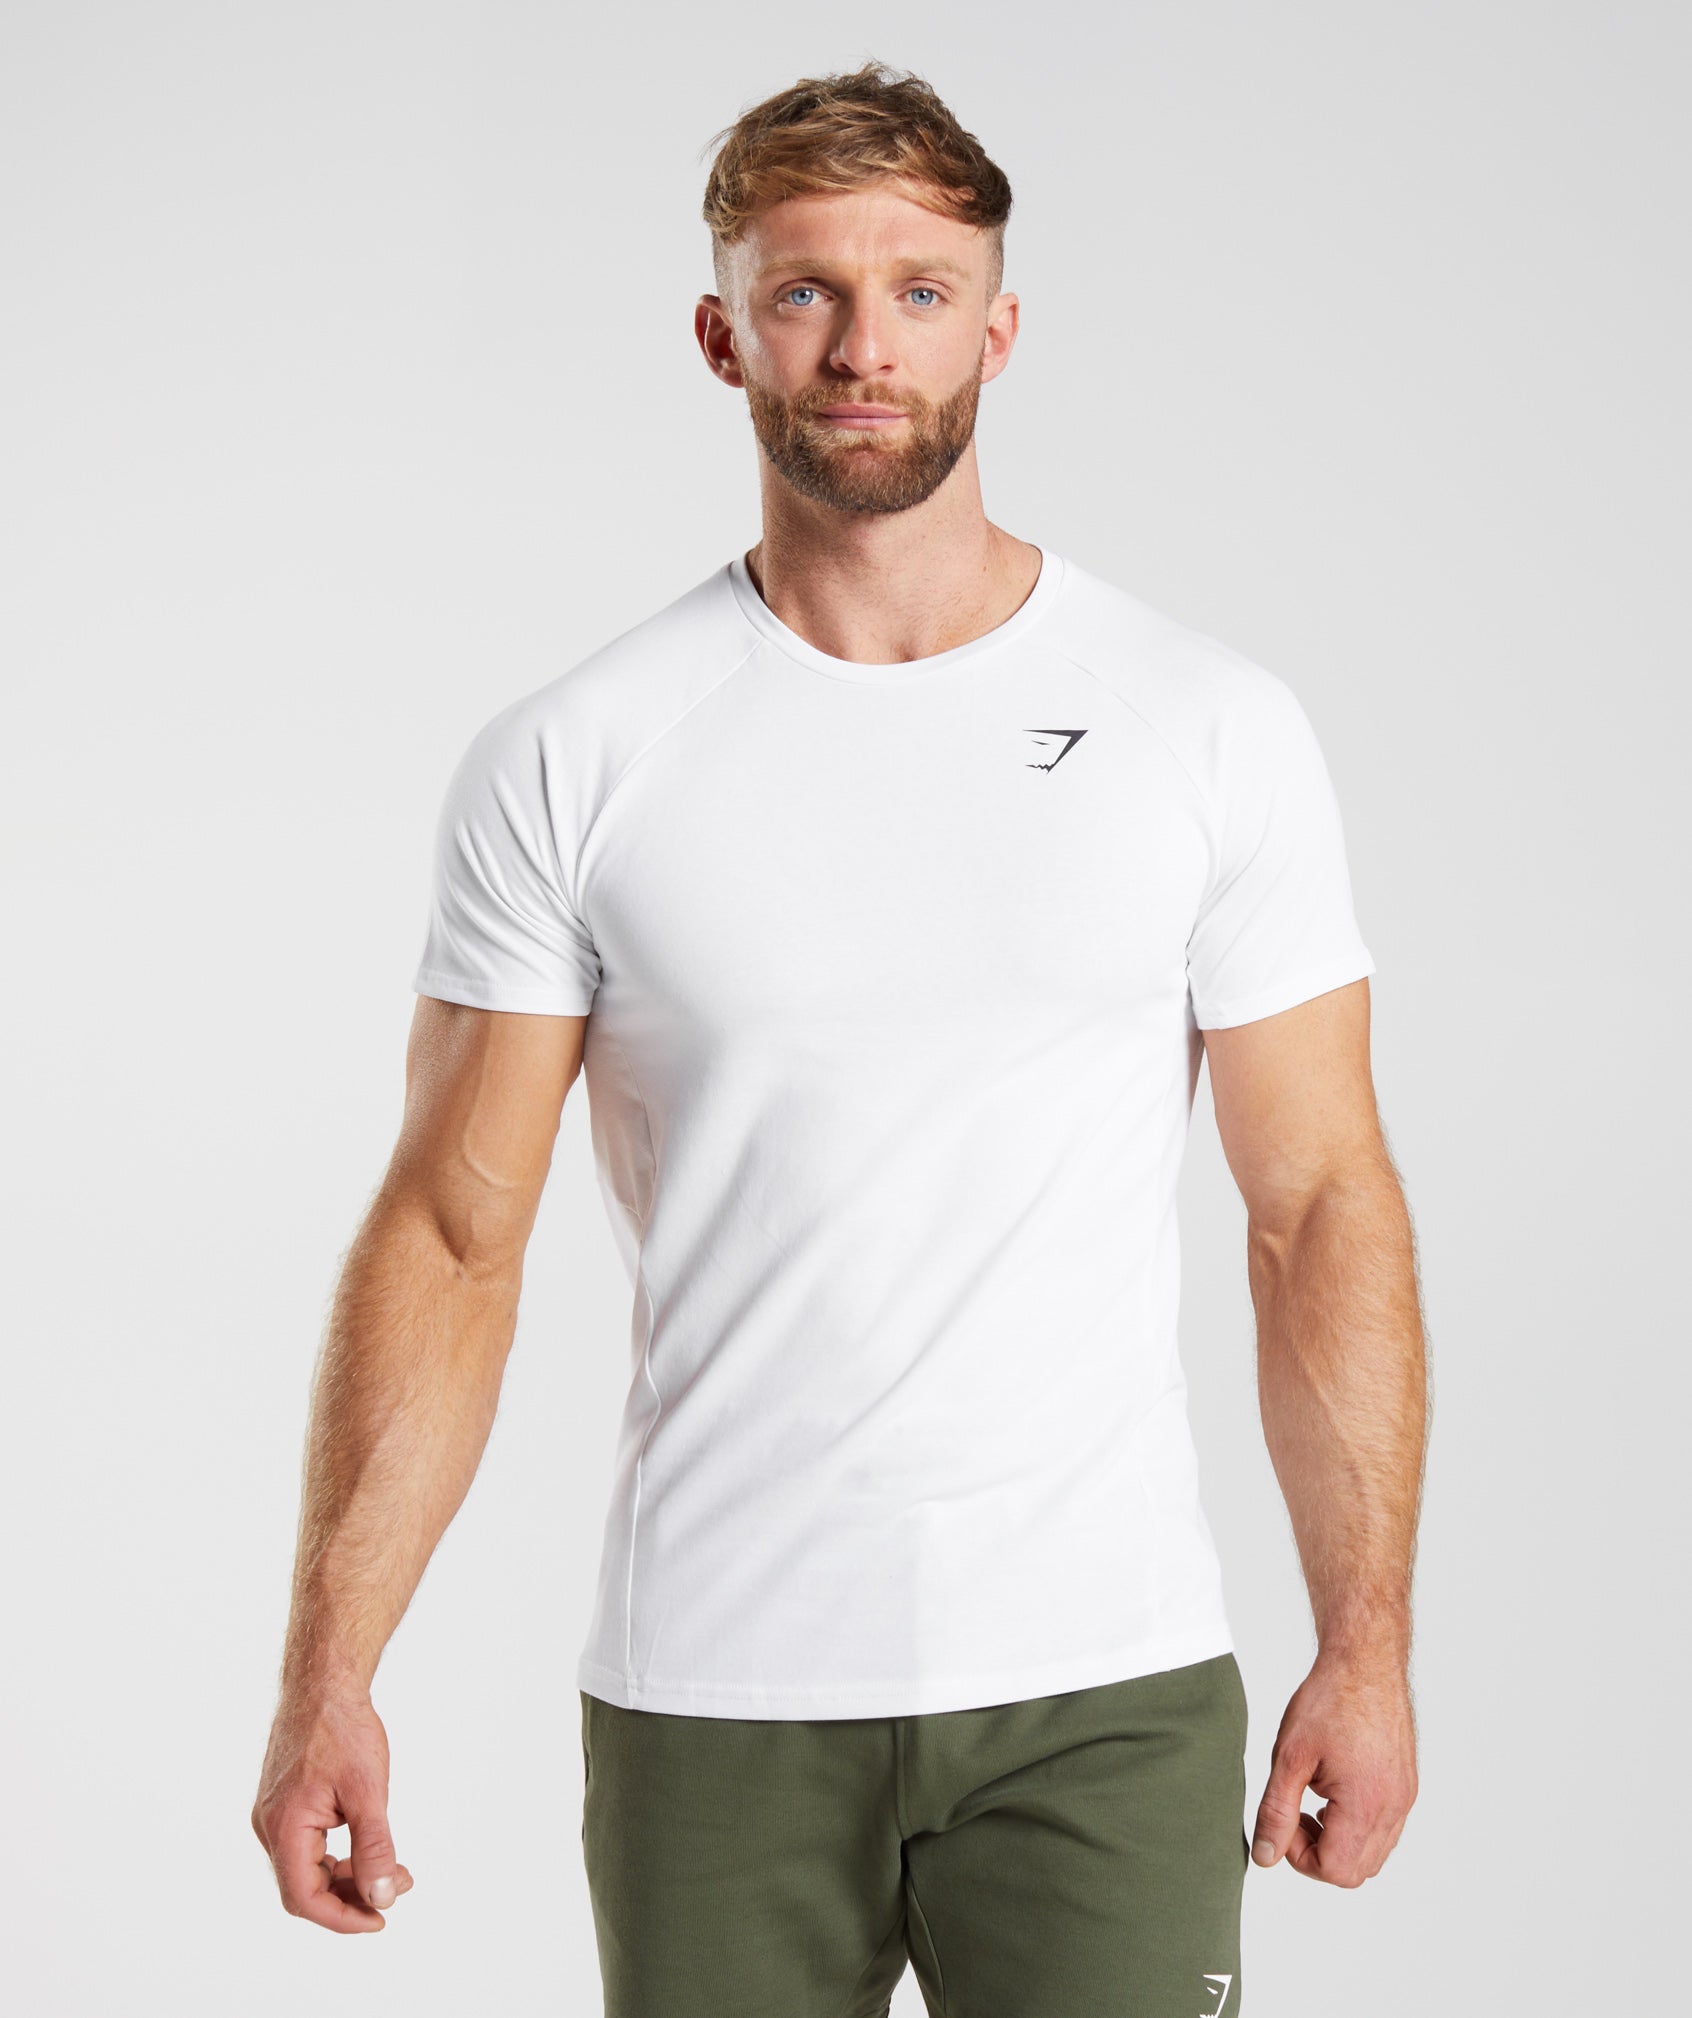 Gymshark Sport Seamless T-Shirt - White/Smokey Grey